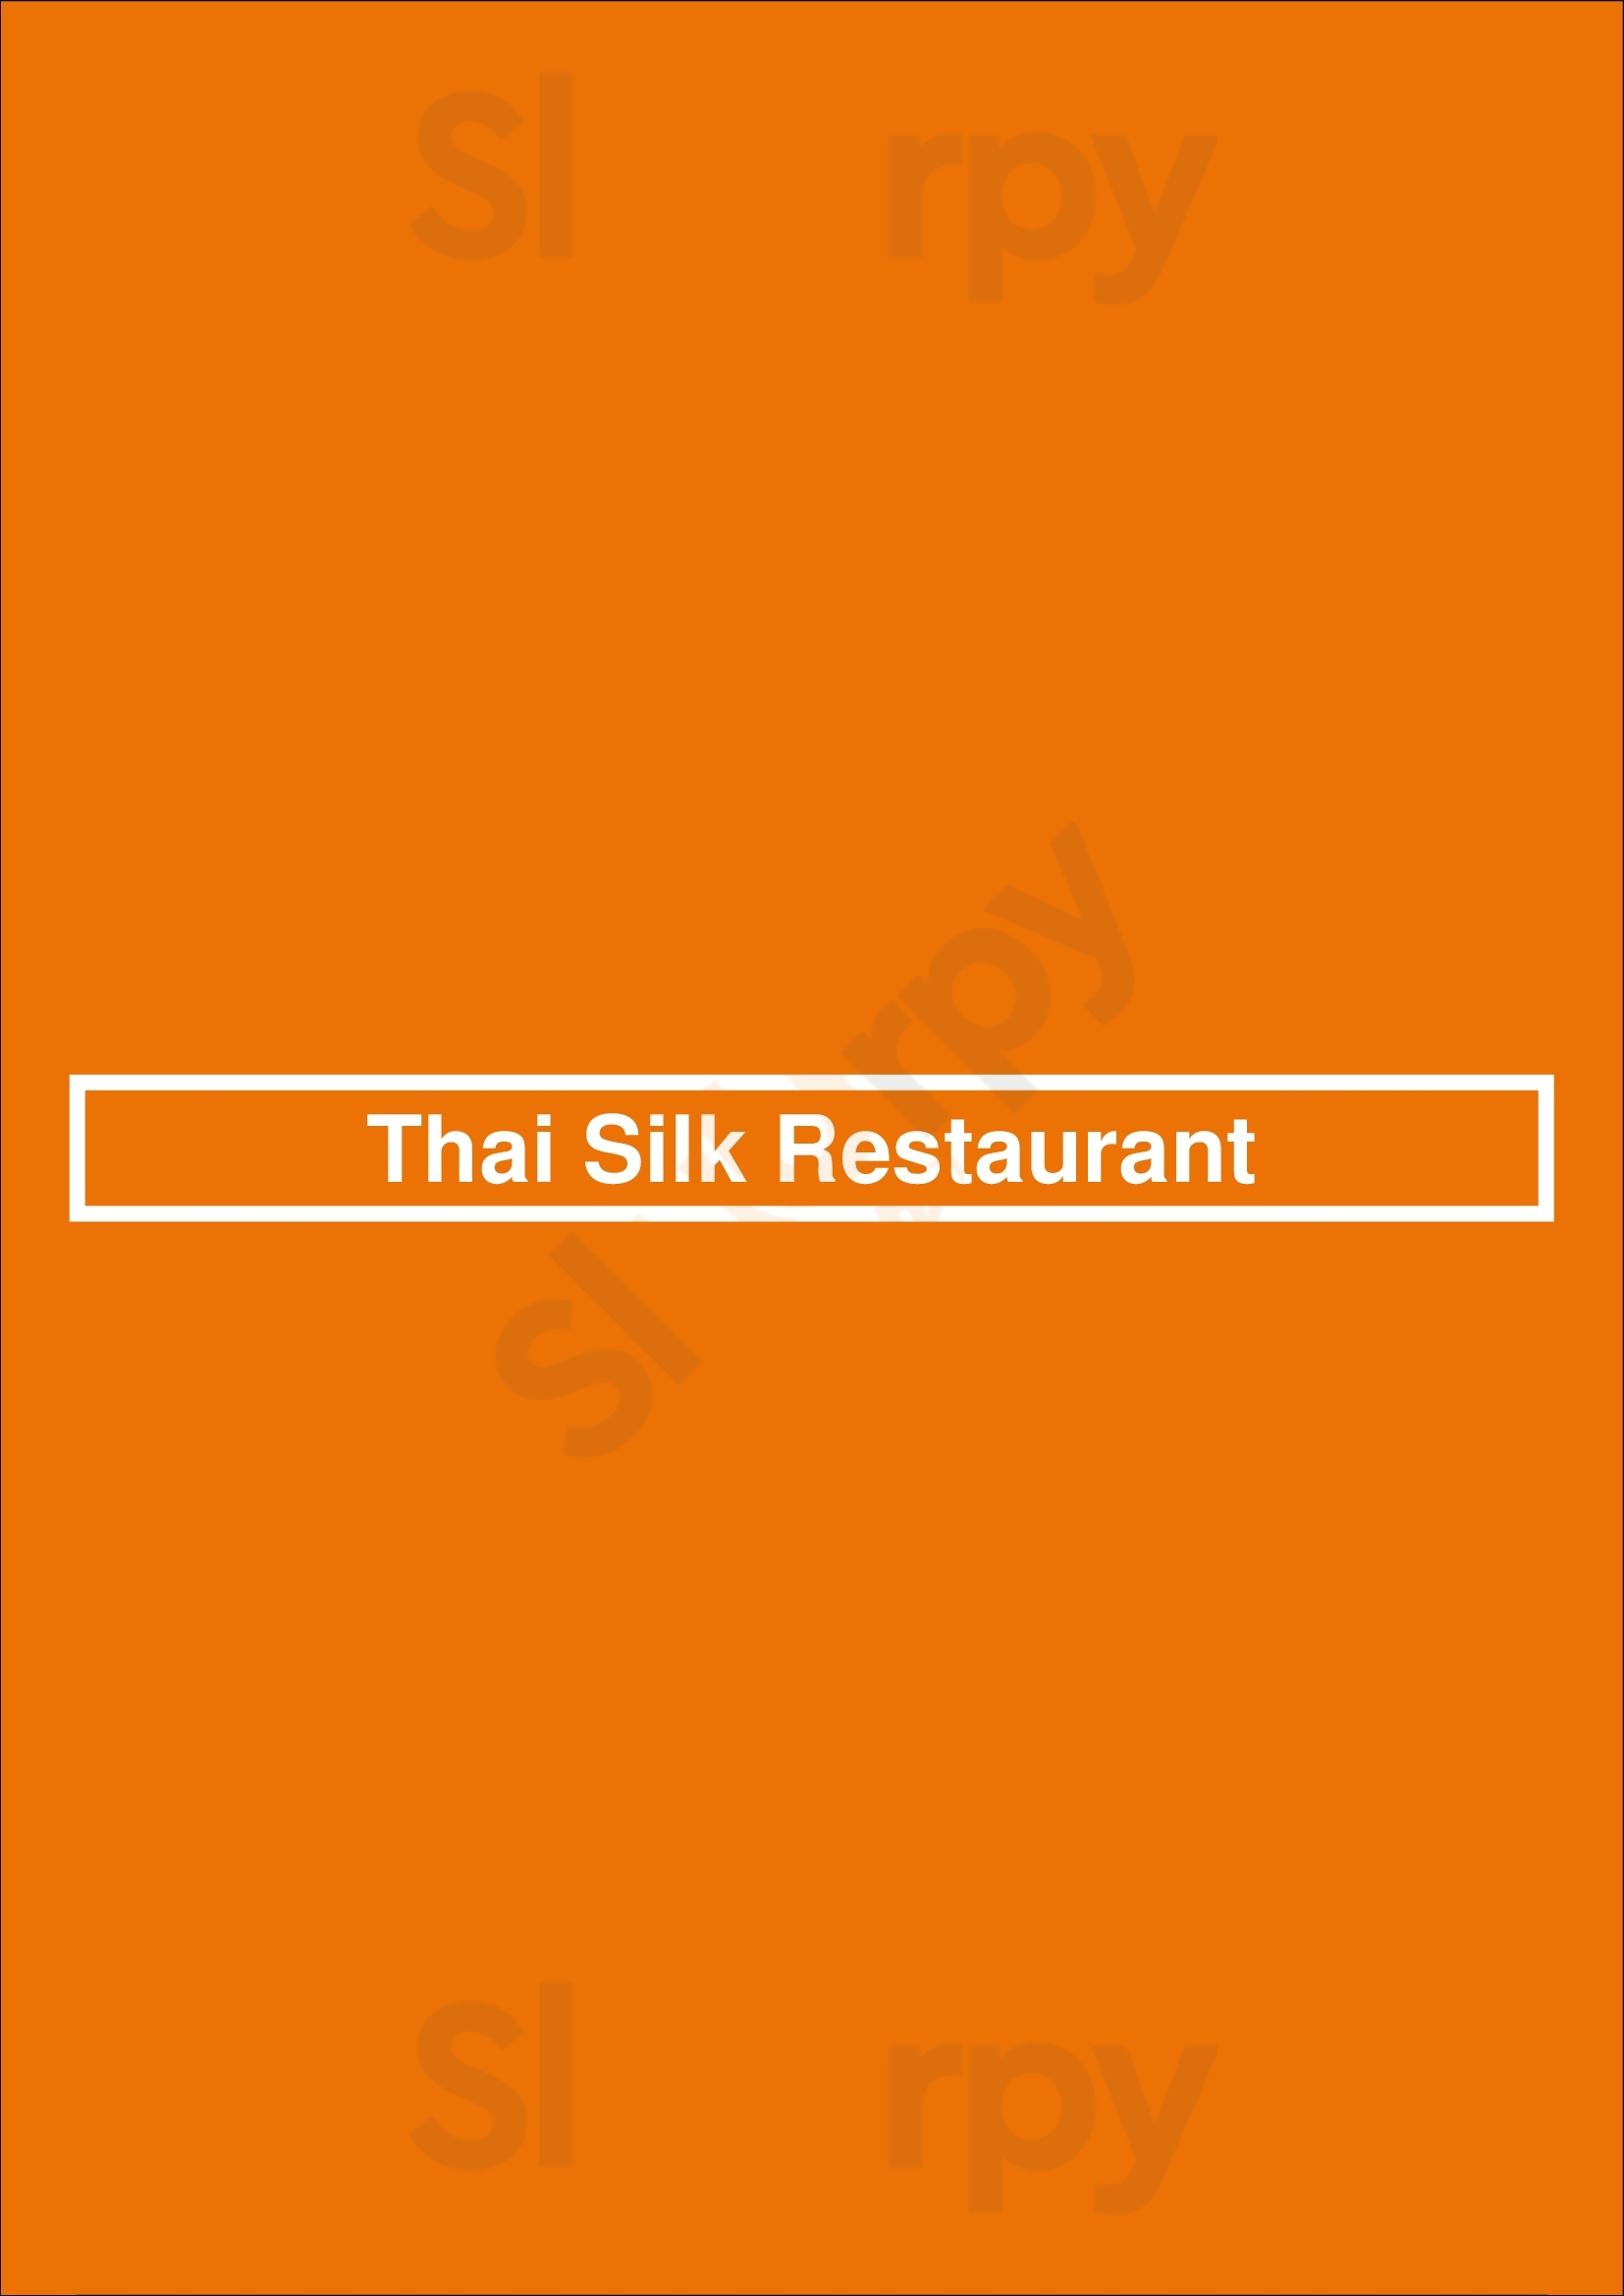 Thai Silk Restaurant Orlando Menu - 1